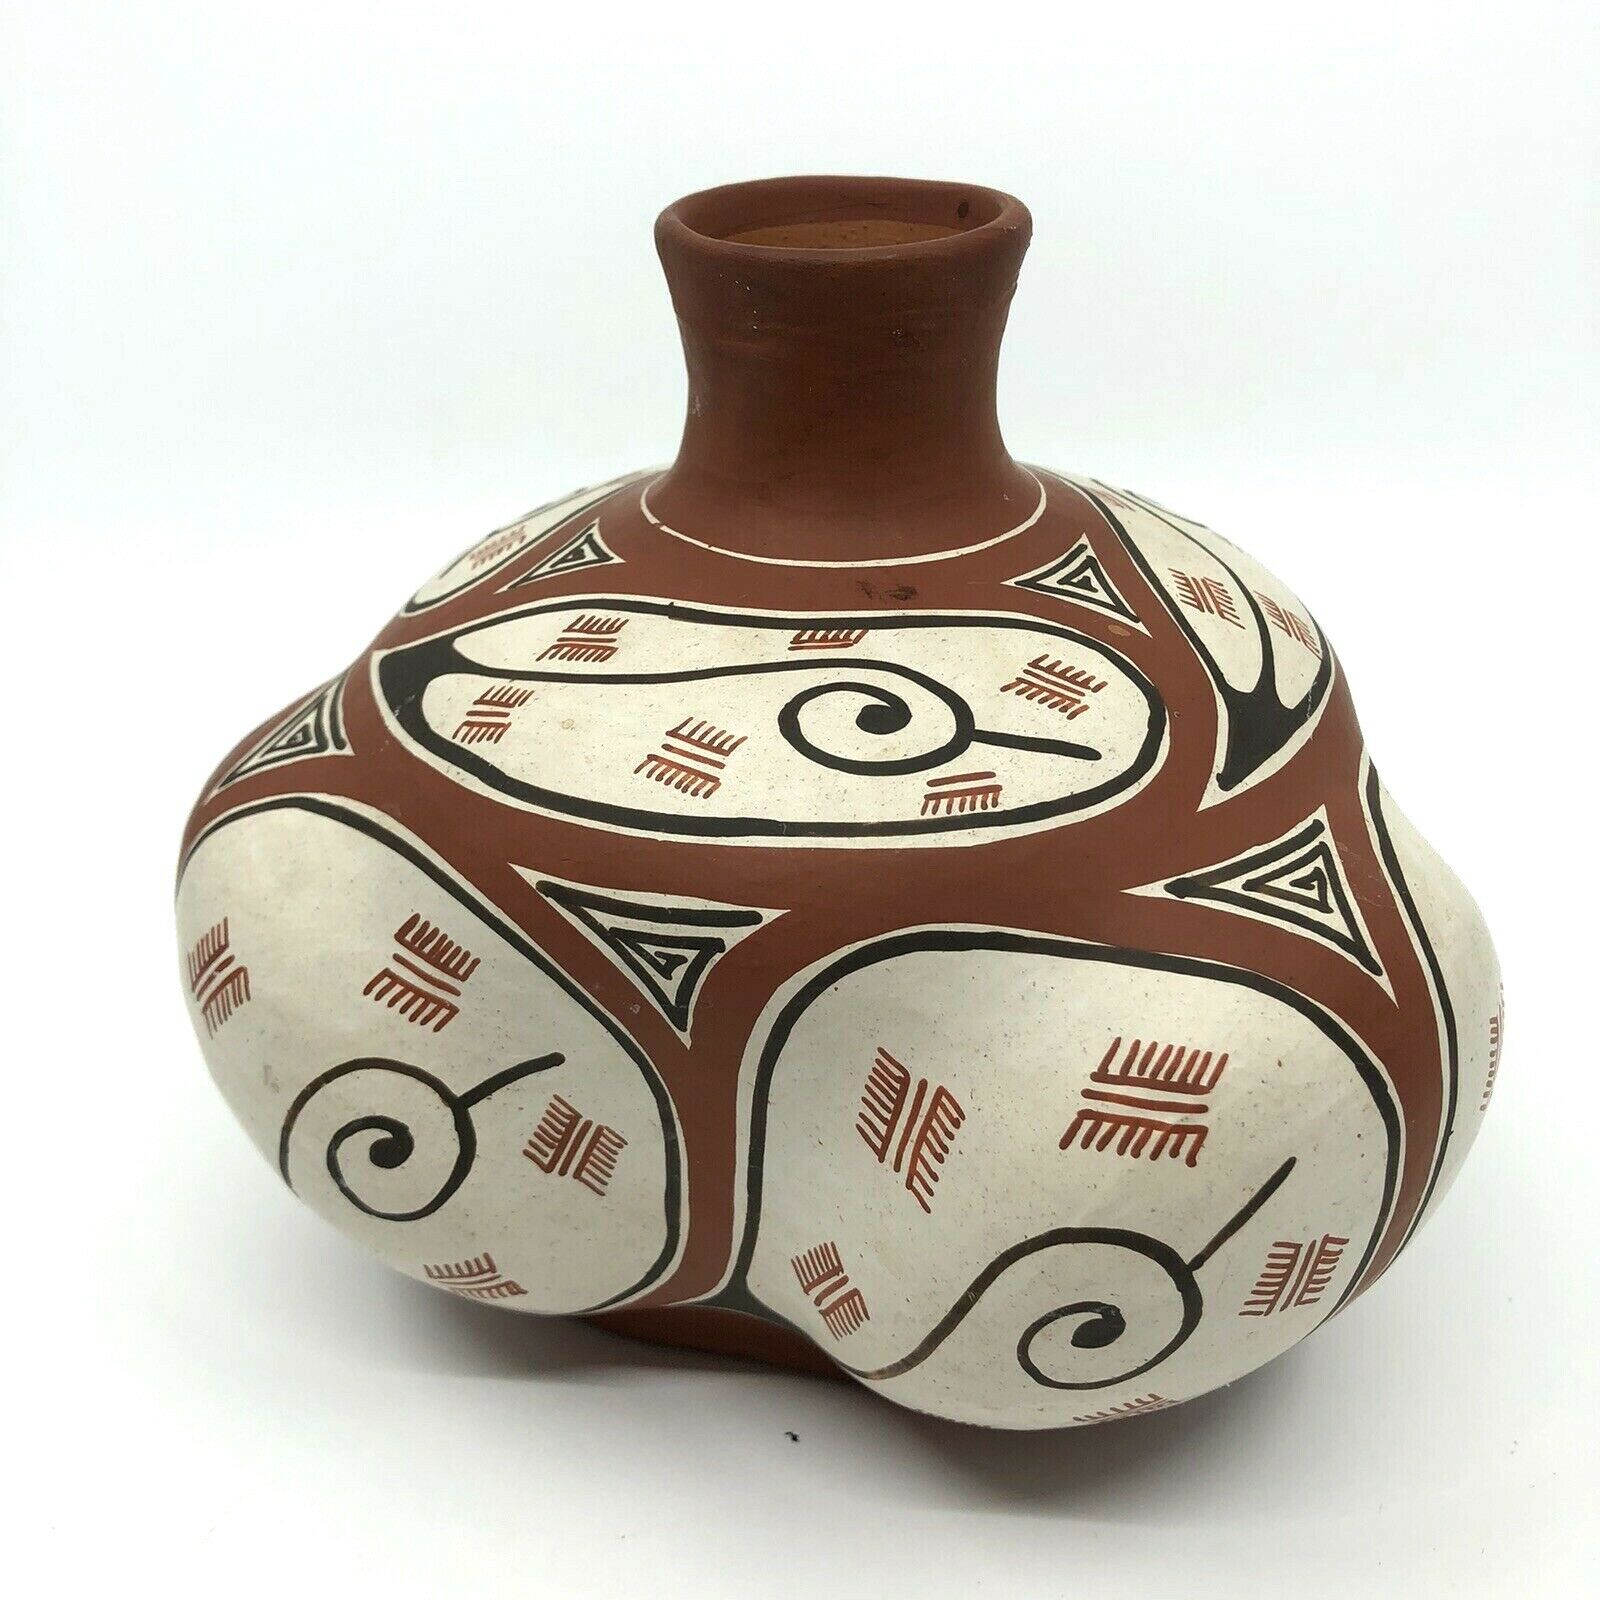 Quibor Lara Pottery Venezuela Ceramic 5"x5" Vase Native South American Folk Art